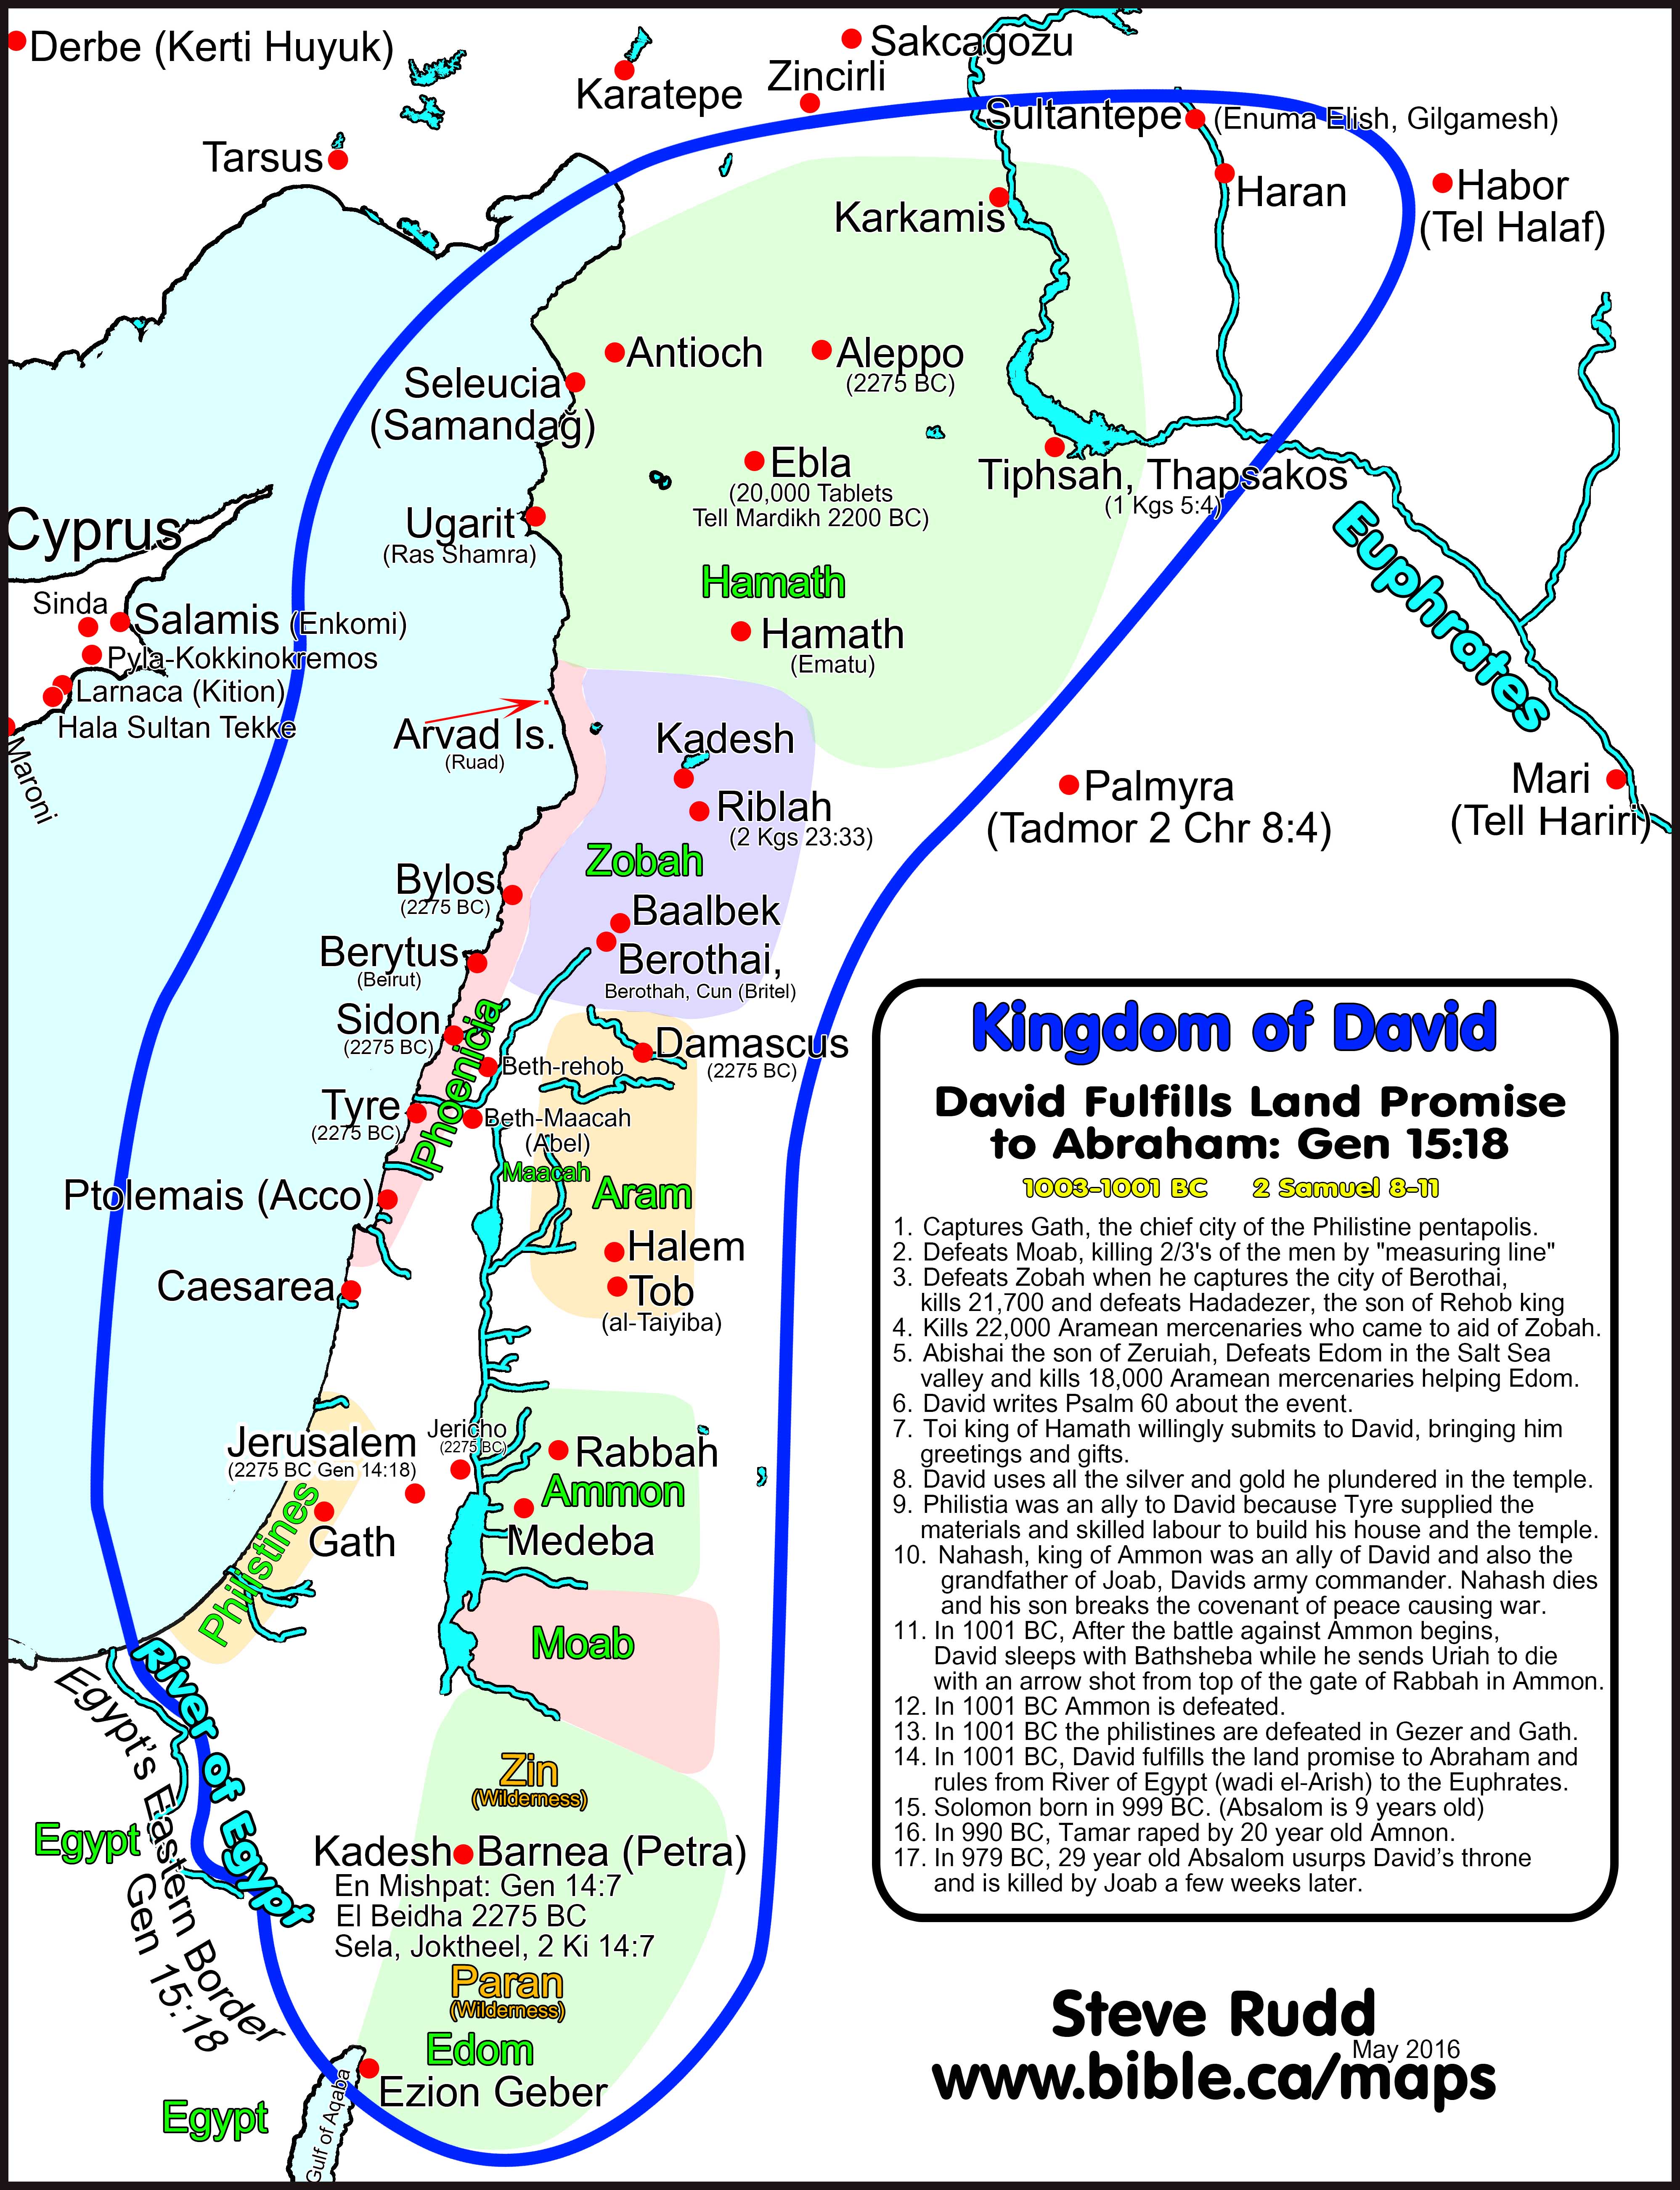 Maps Master Archeological Bible Study Map Israel Promised Land 2samuel8 1chronicles18 David Fulfills Abrahams Land Promise 997 995bc 